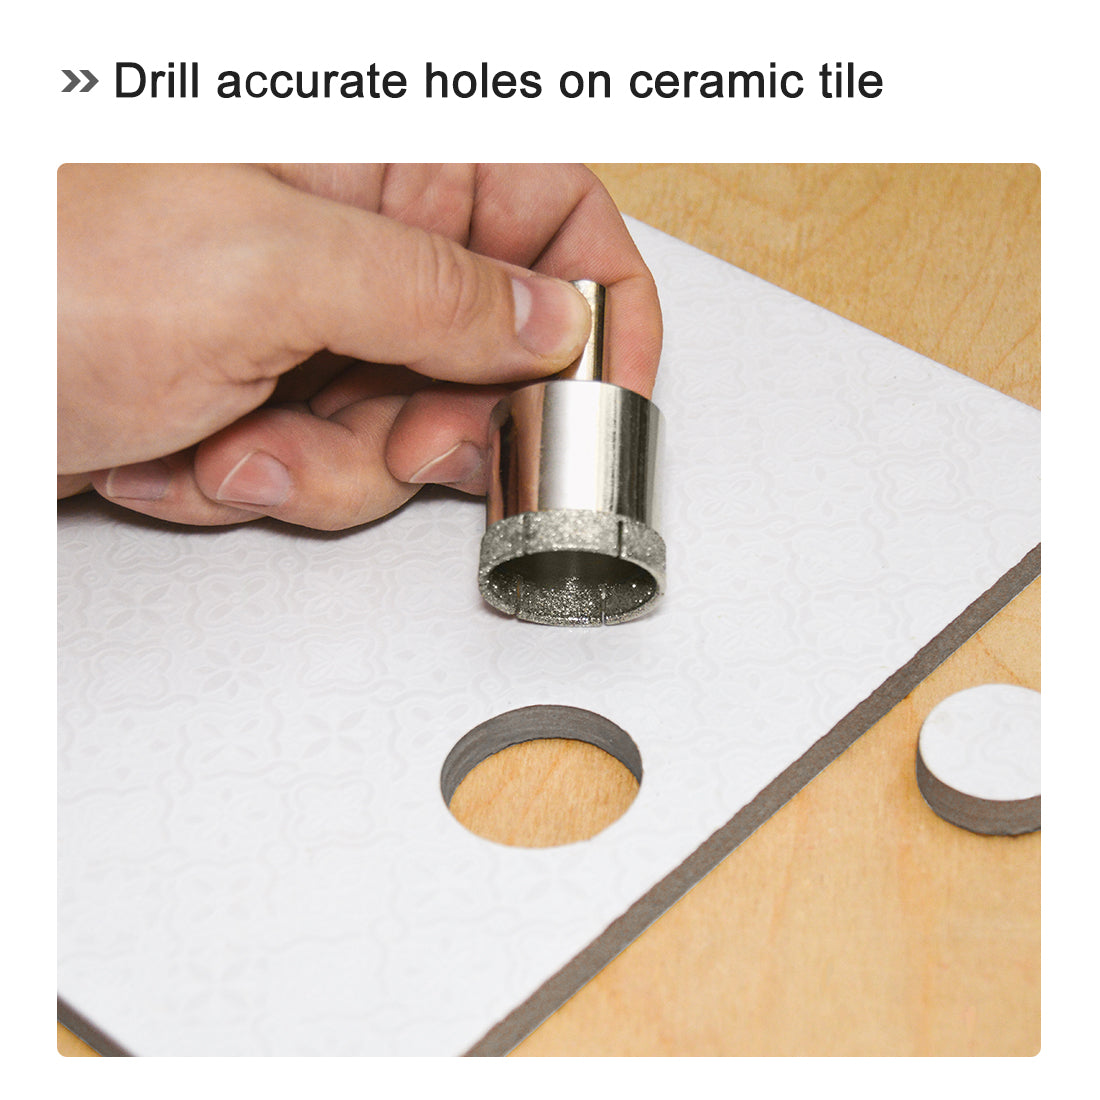 Uxcell Uxcell 4 Pcs 8mm Diamond Grit Hole Saw Drill Bit for Glass Ceramics Porcelain Ceramic Tile